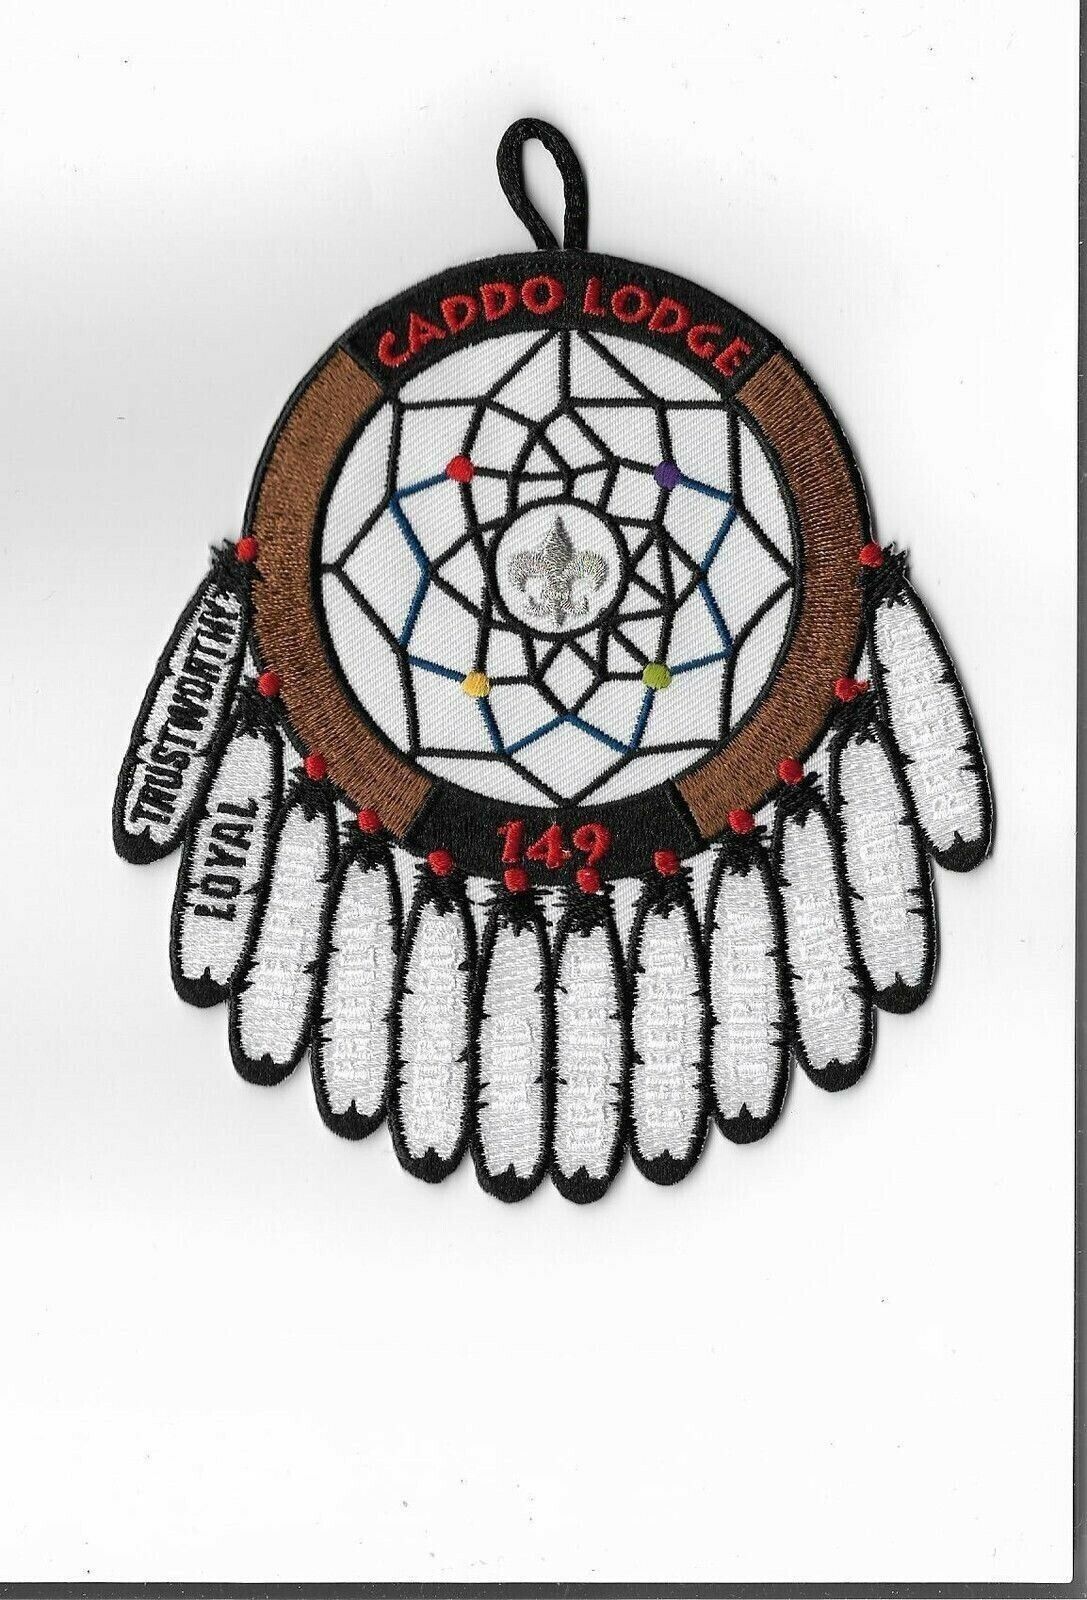 Lodge 149 Caddo Fellowship Scout Law patch (Trustworthy Loyal)